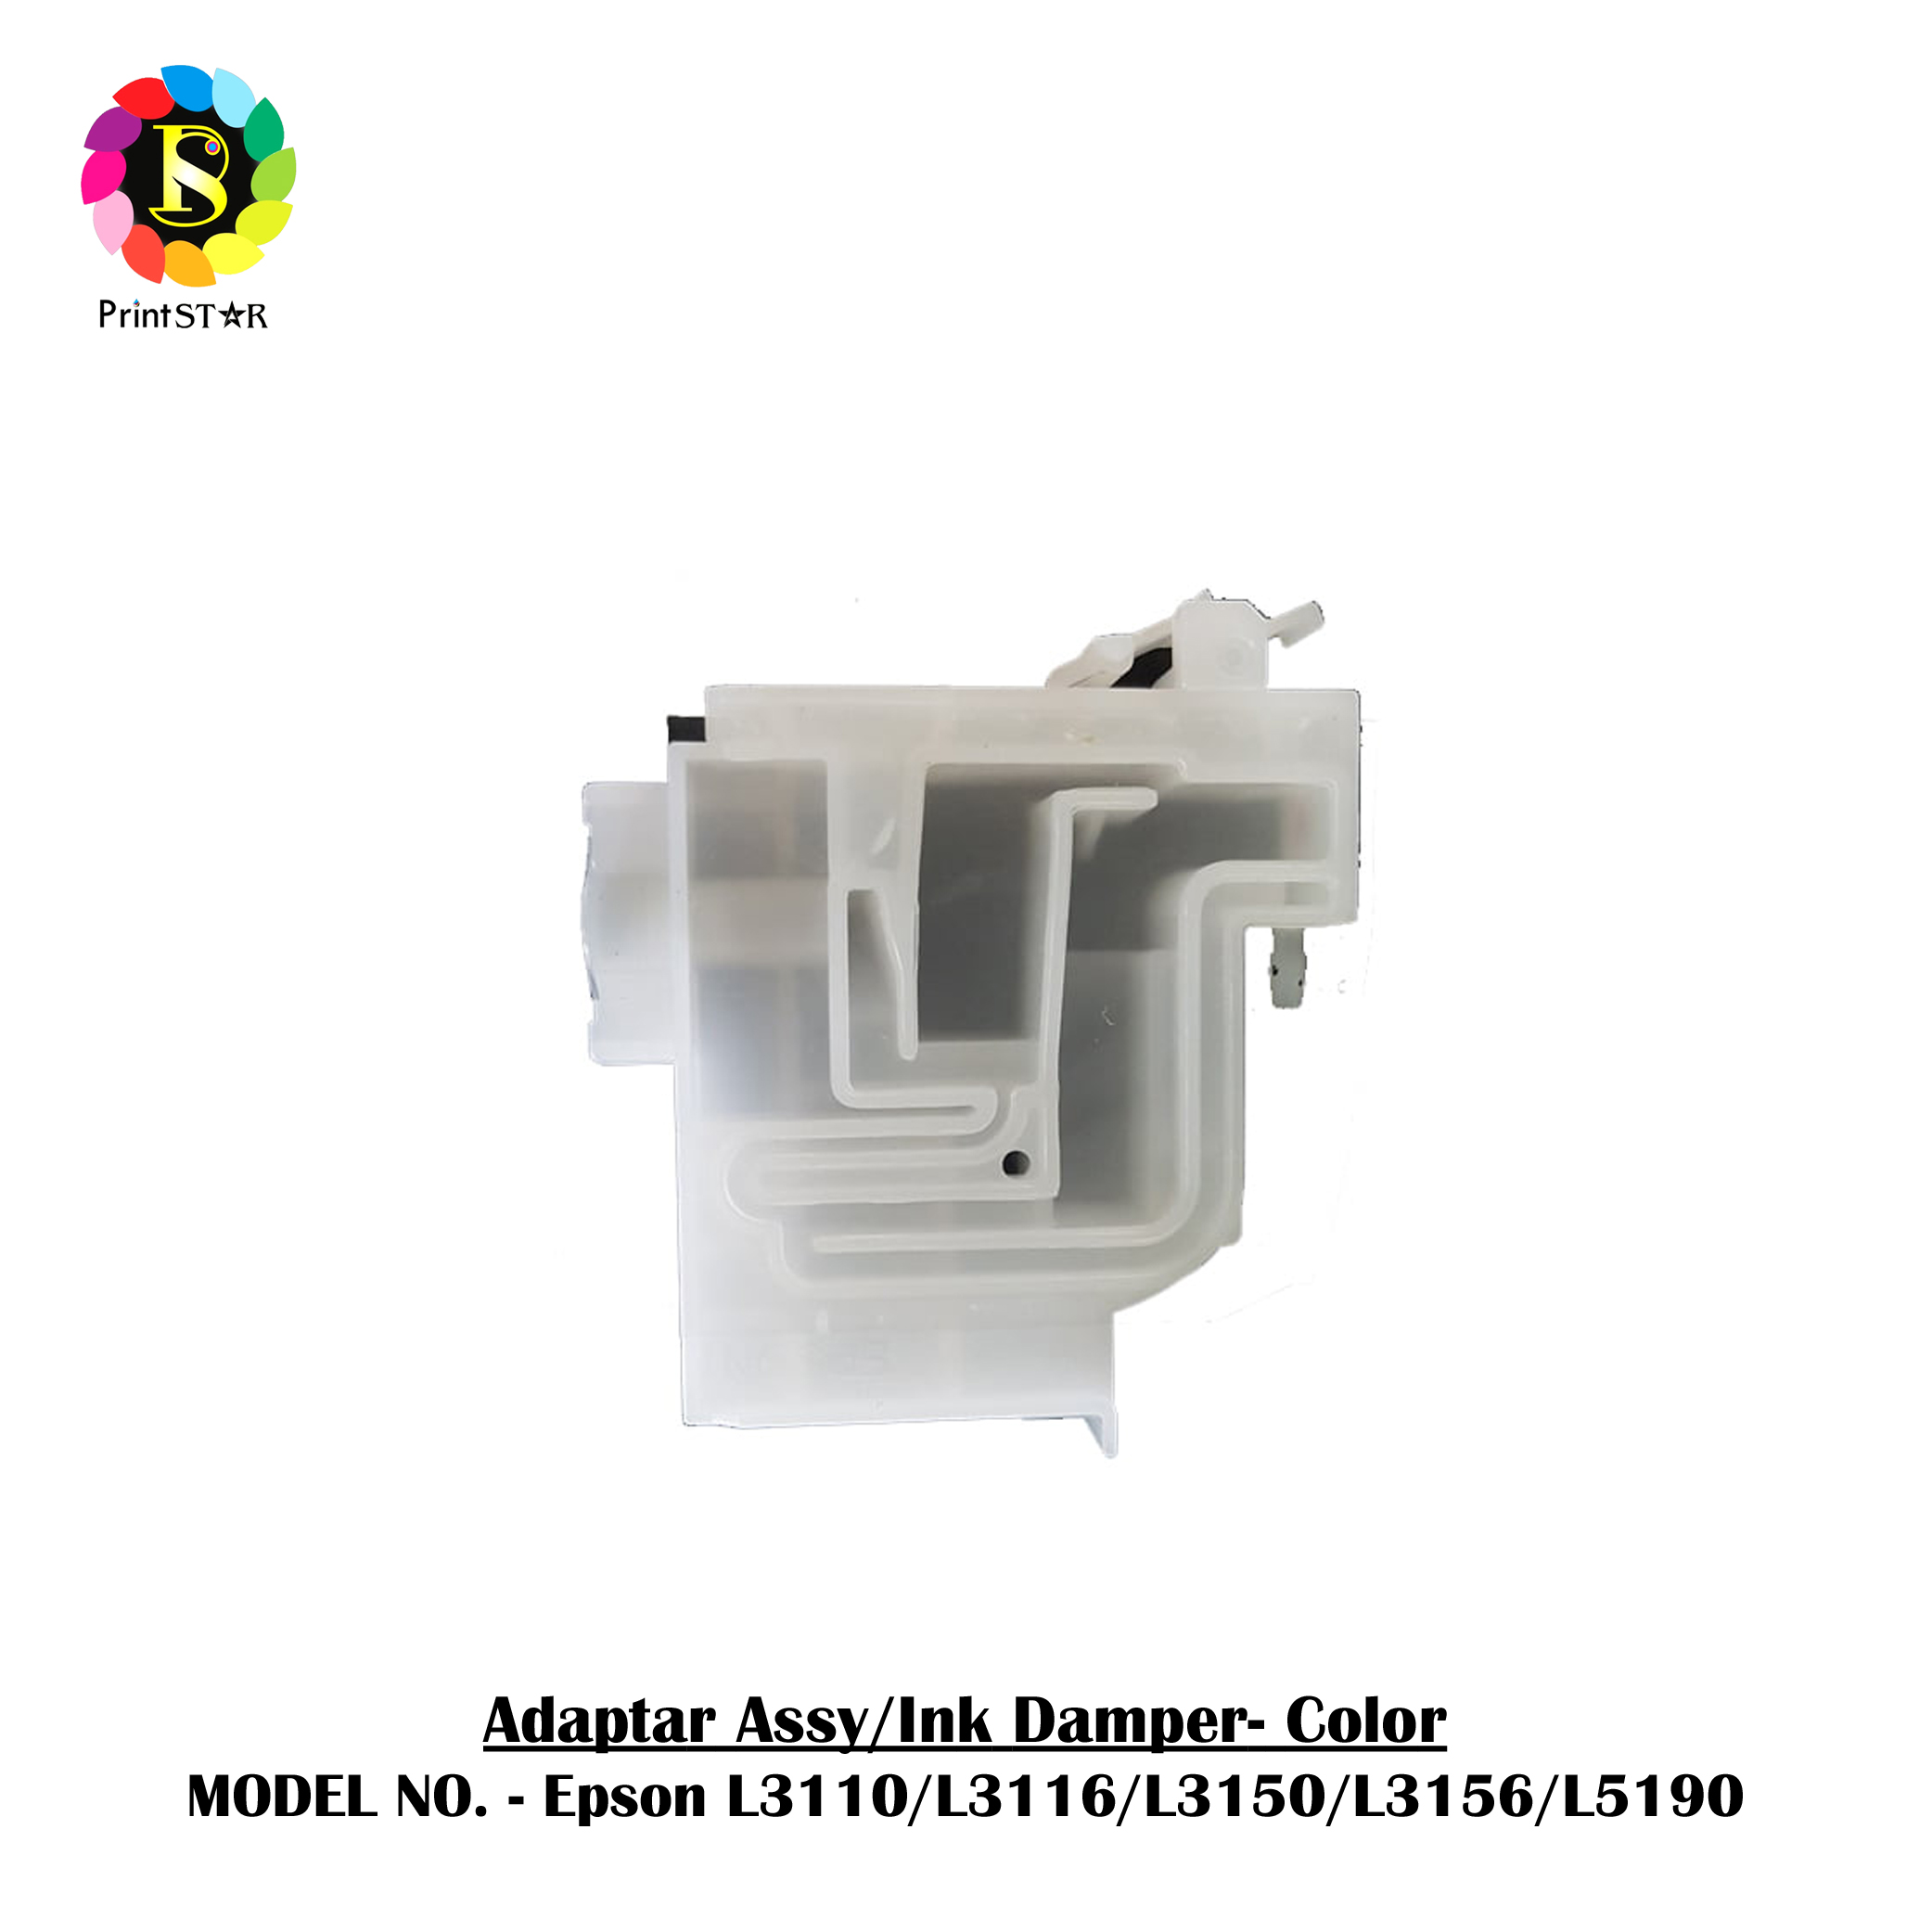 Print Star Ink Damper Adapter Assembly Color For Epson L3110 3027